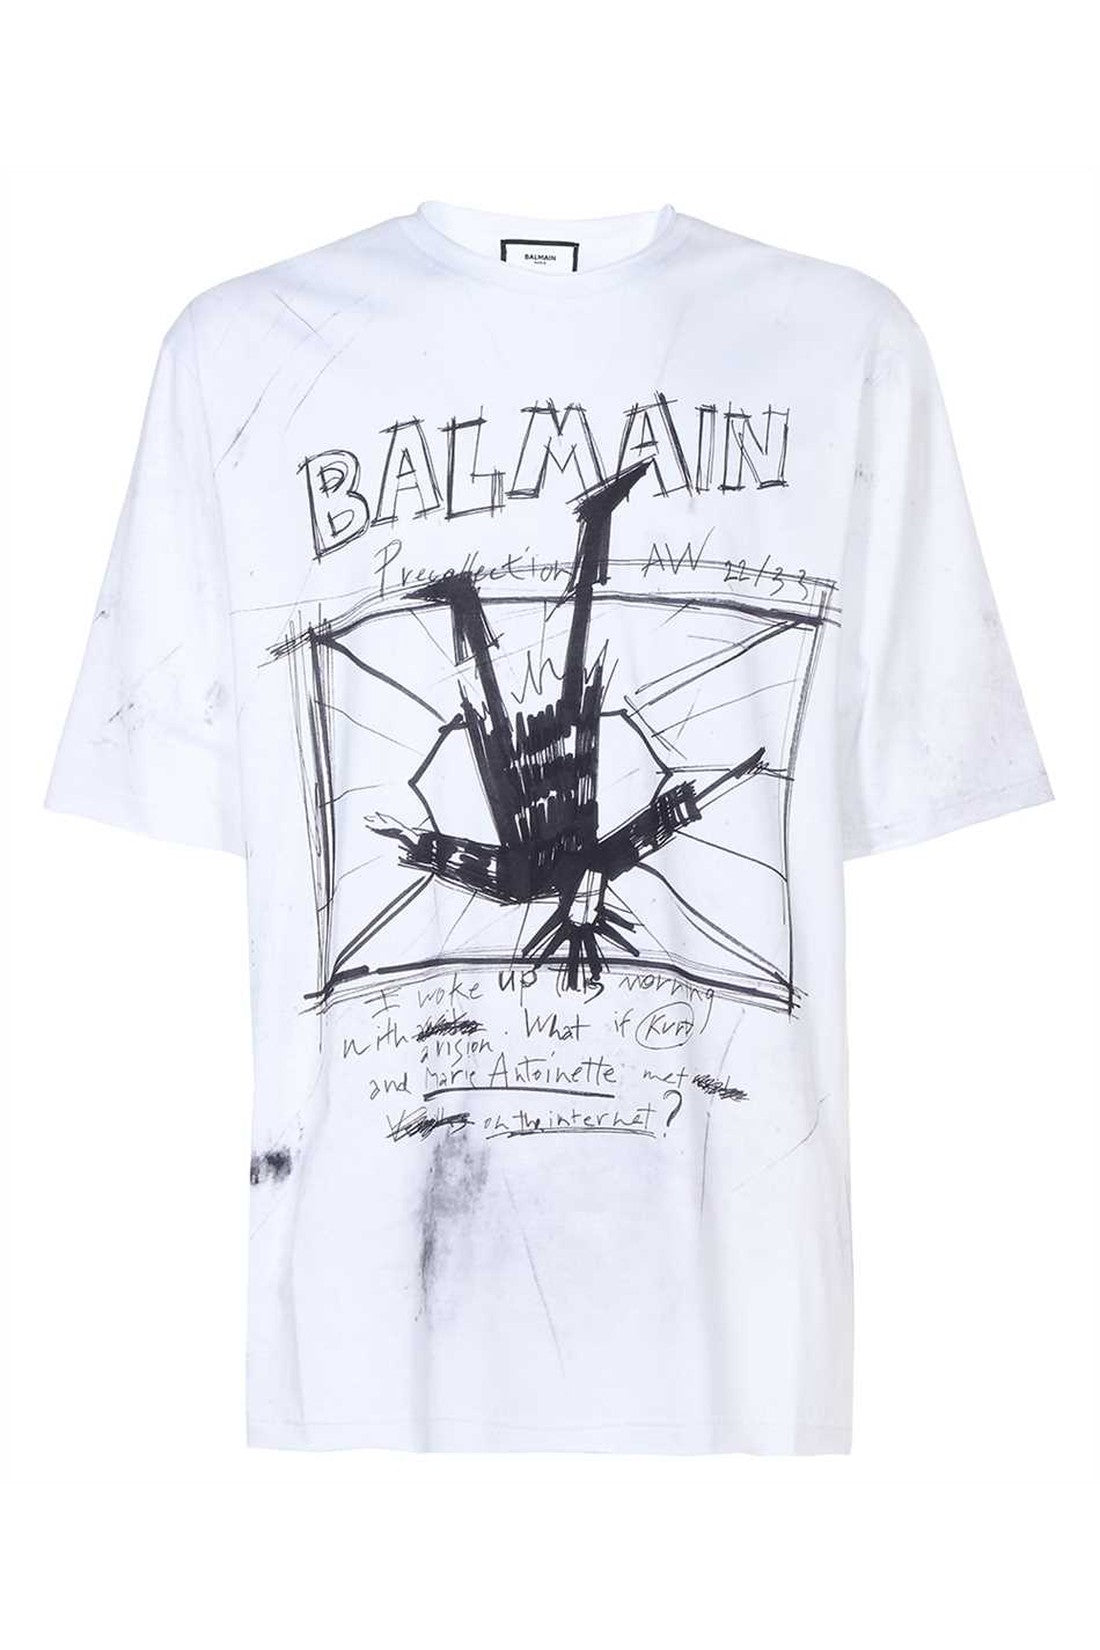 Balmain-OUTLET-SALE-Crew-neck-t-shirt-Shirts-L-ARCHIVE-COLLECTION_939e3c44-945b-4f81-ad64-4fad8d6b6a10.jpg